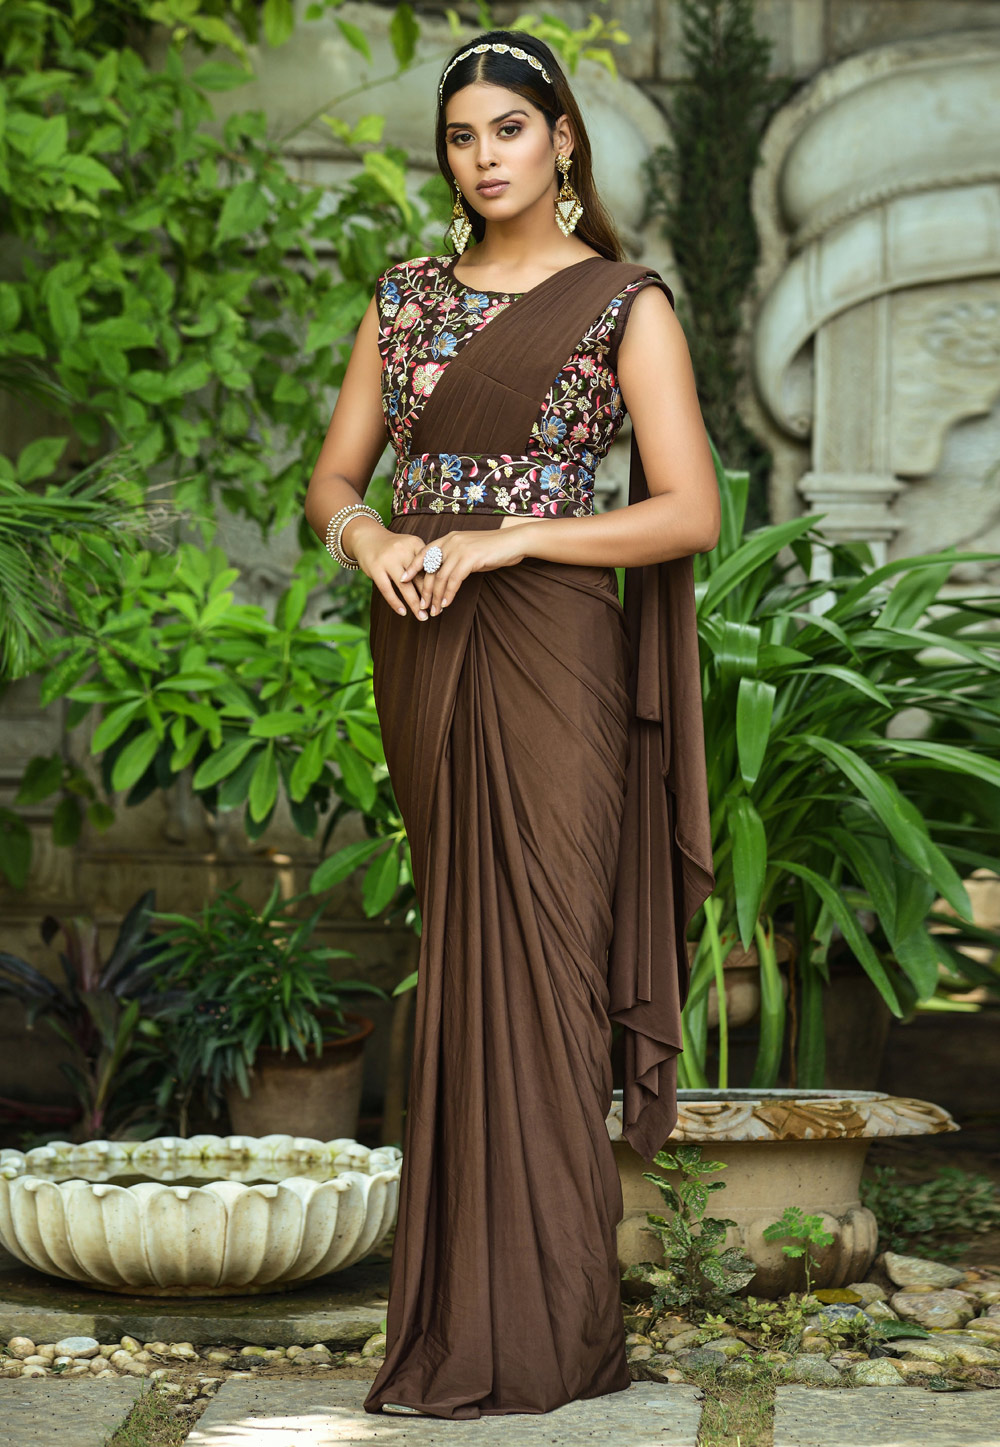 Details more than 234 plain saree with designer blouse best